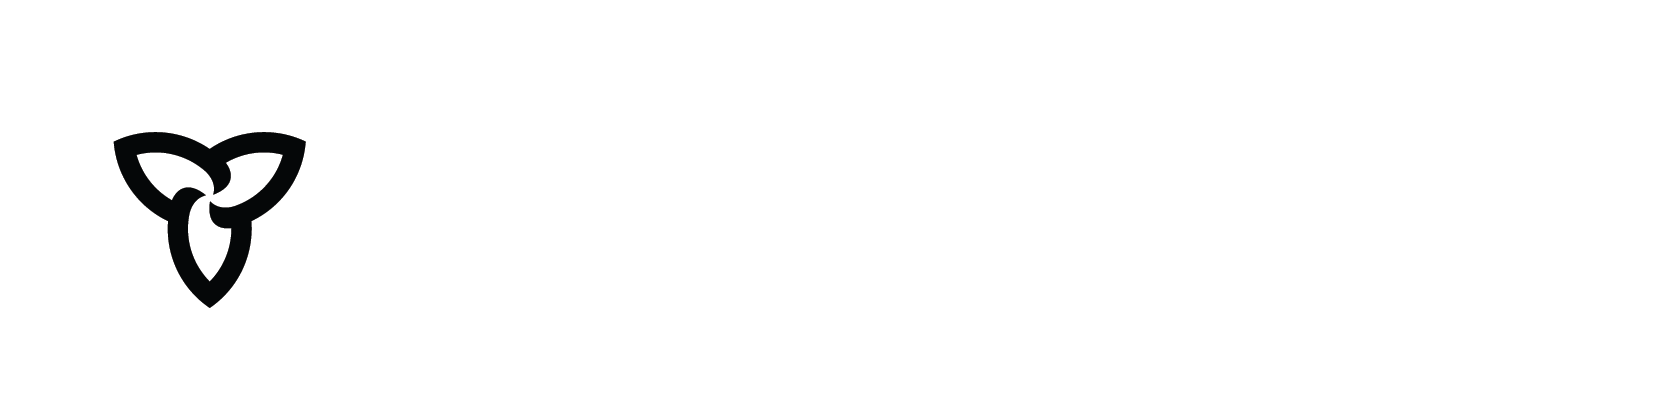 Logos d’Investissements Ontario - Blanc transparent en français